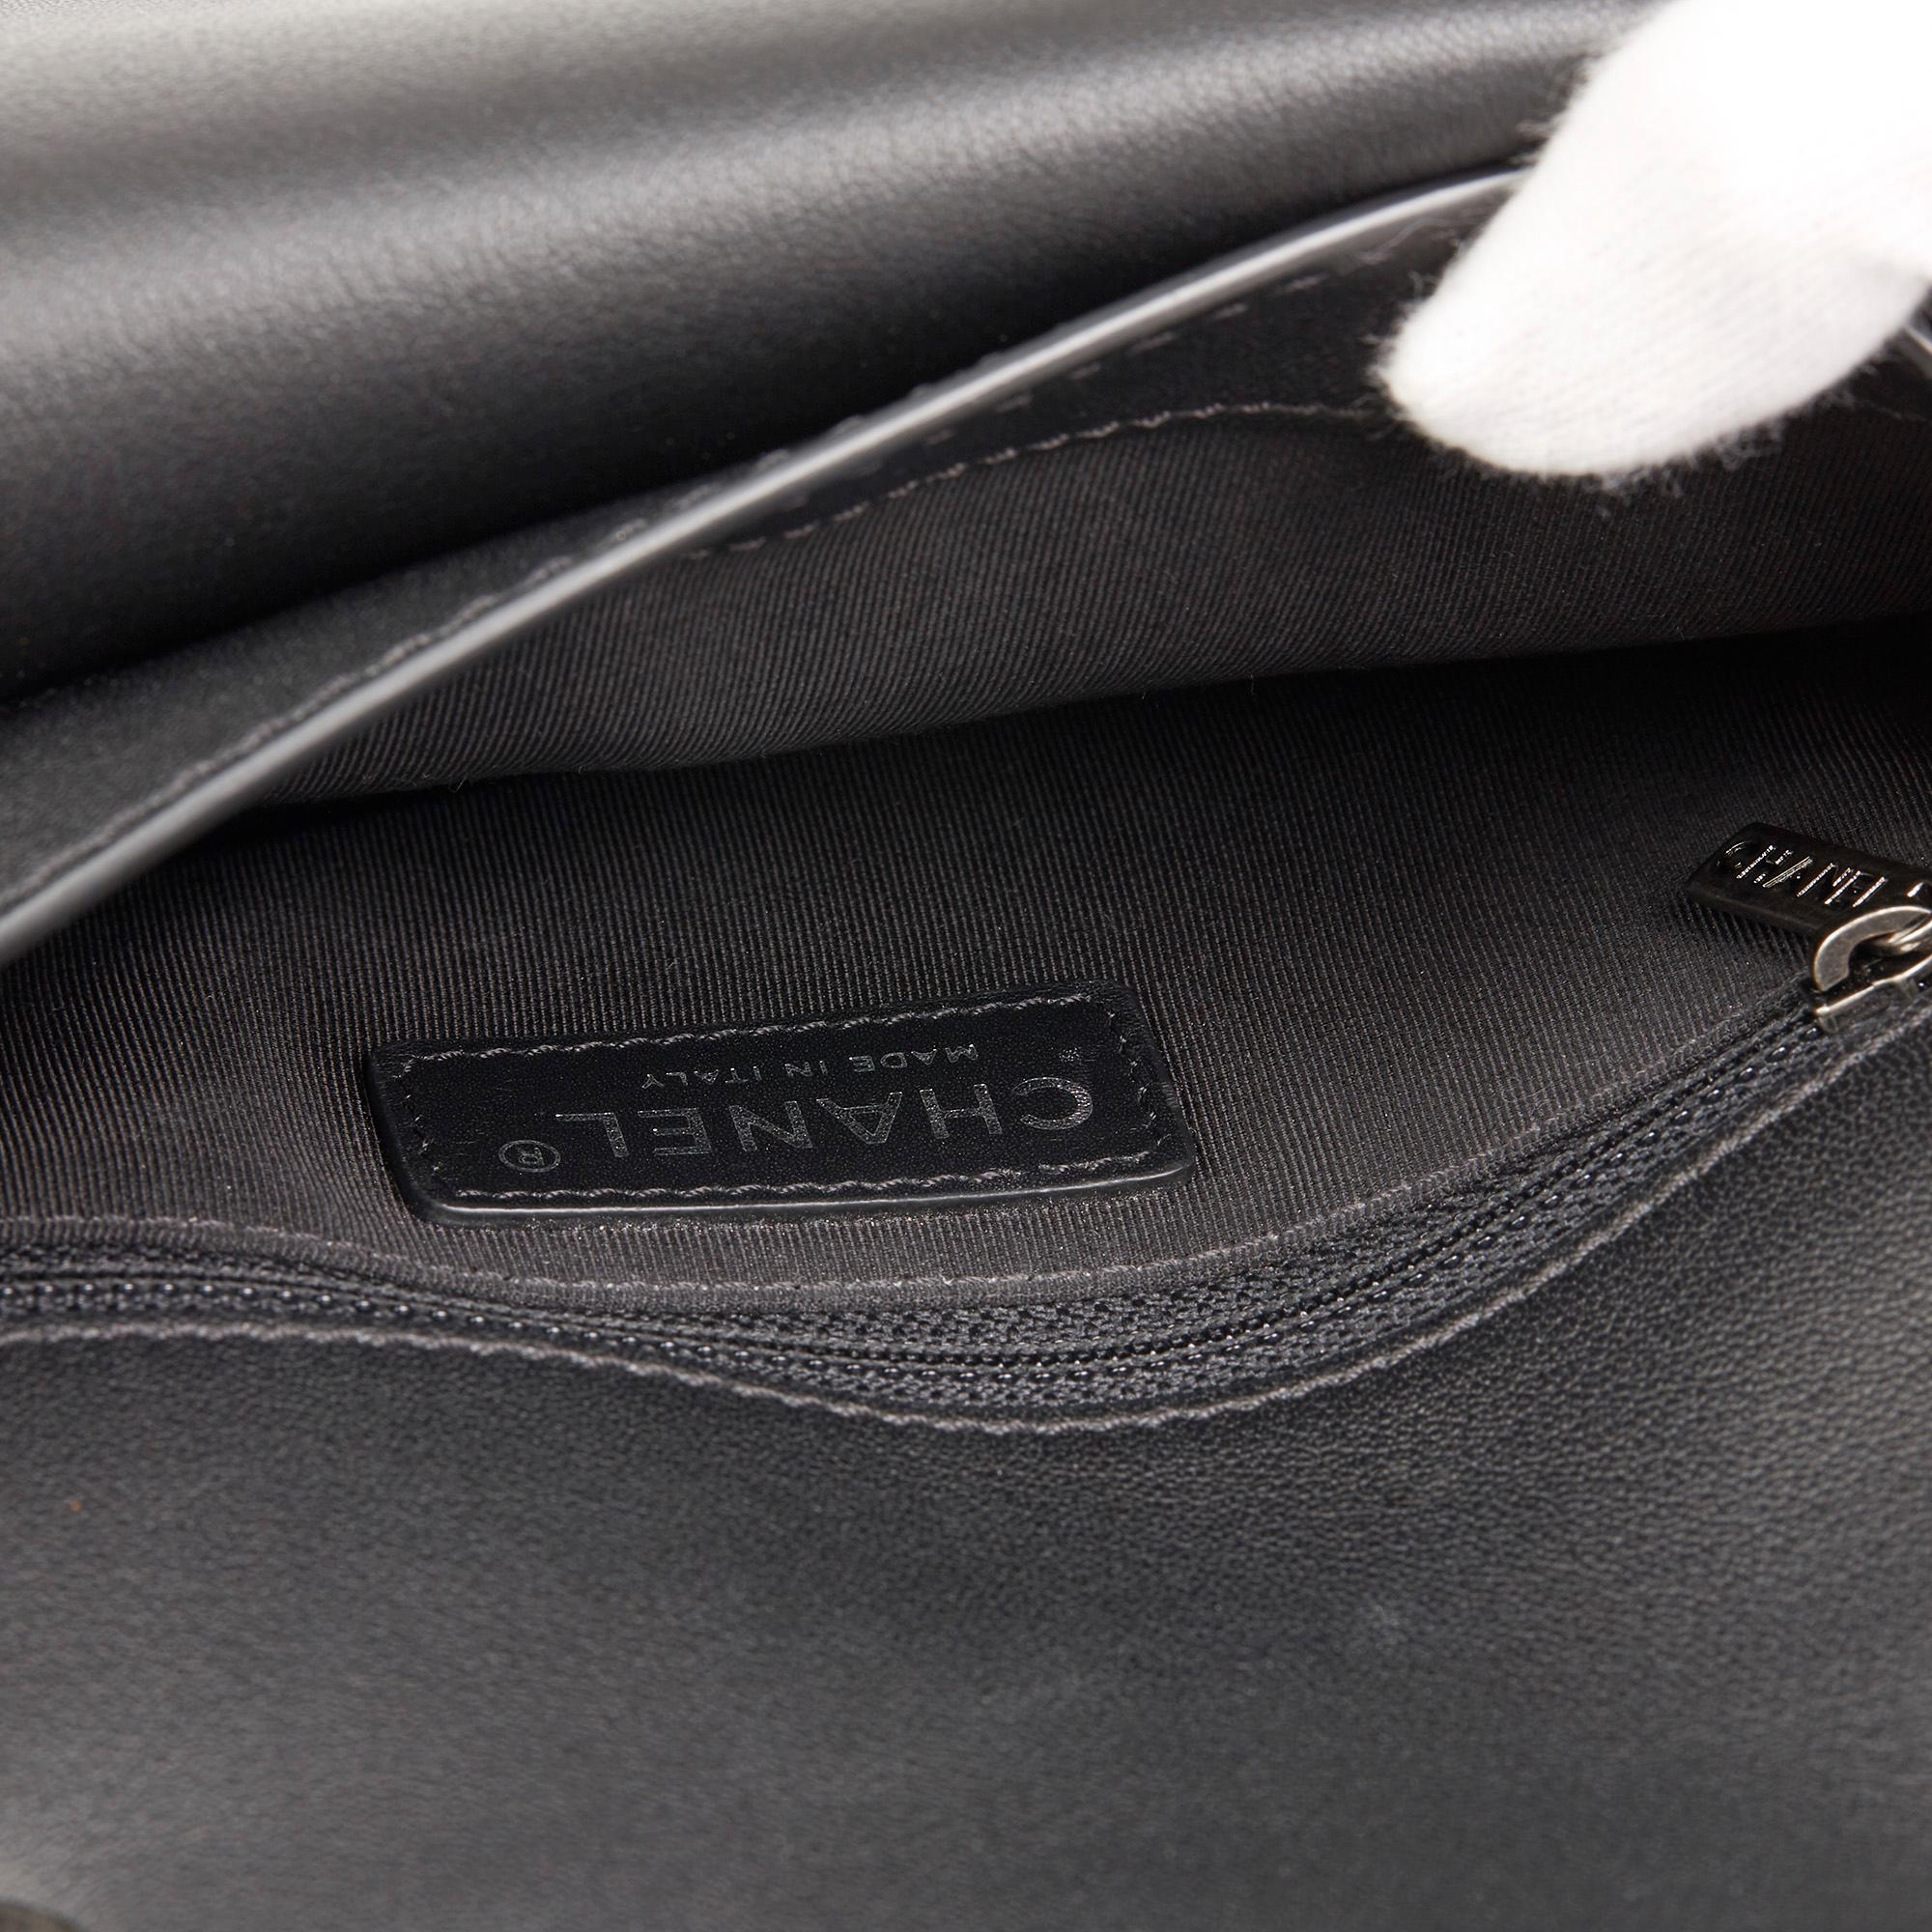 2017 Chanel Black Quilted Calfskin Leather Saddle Bag 4